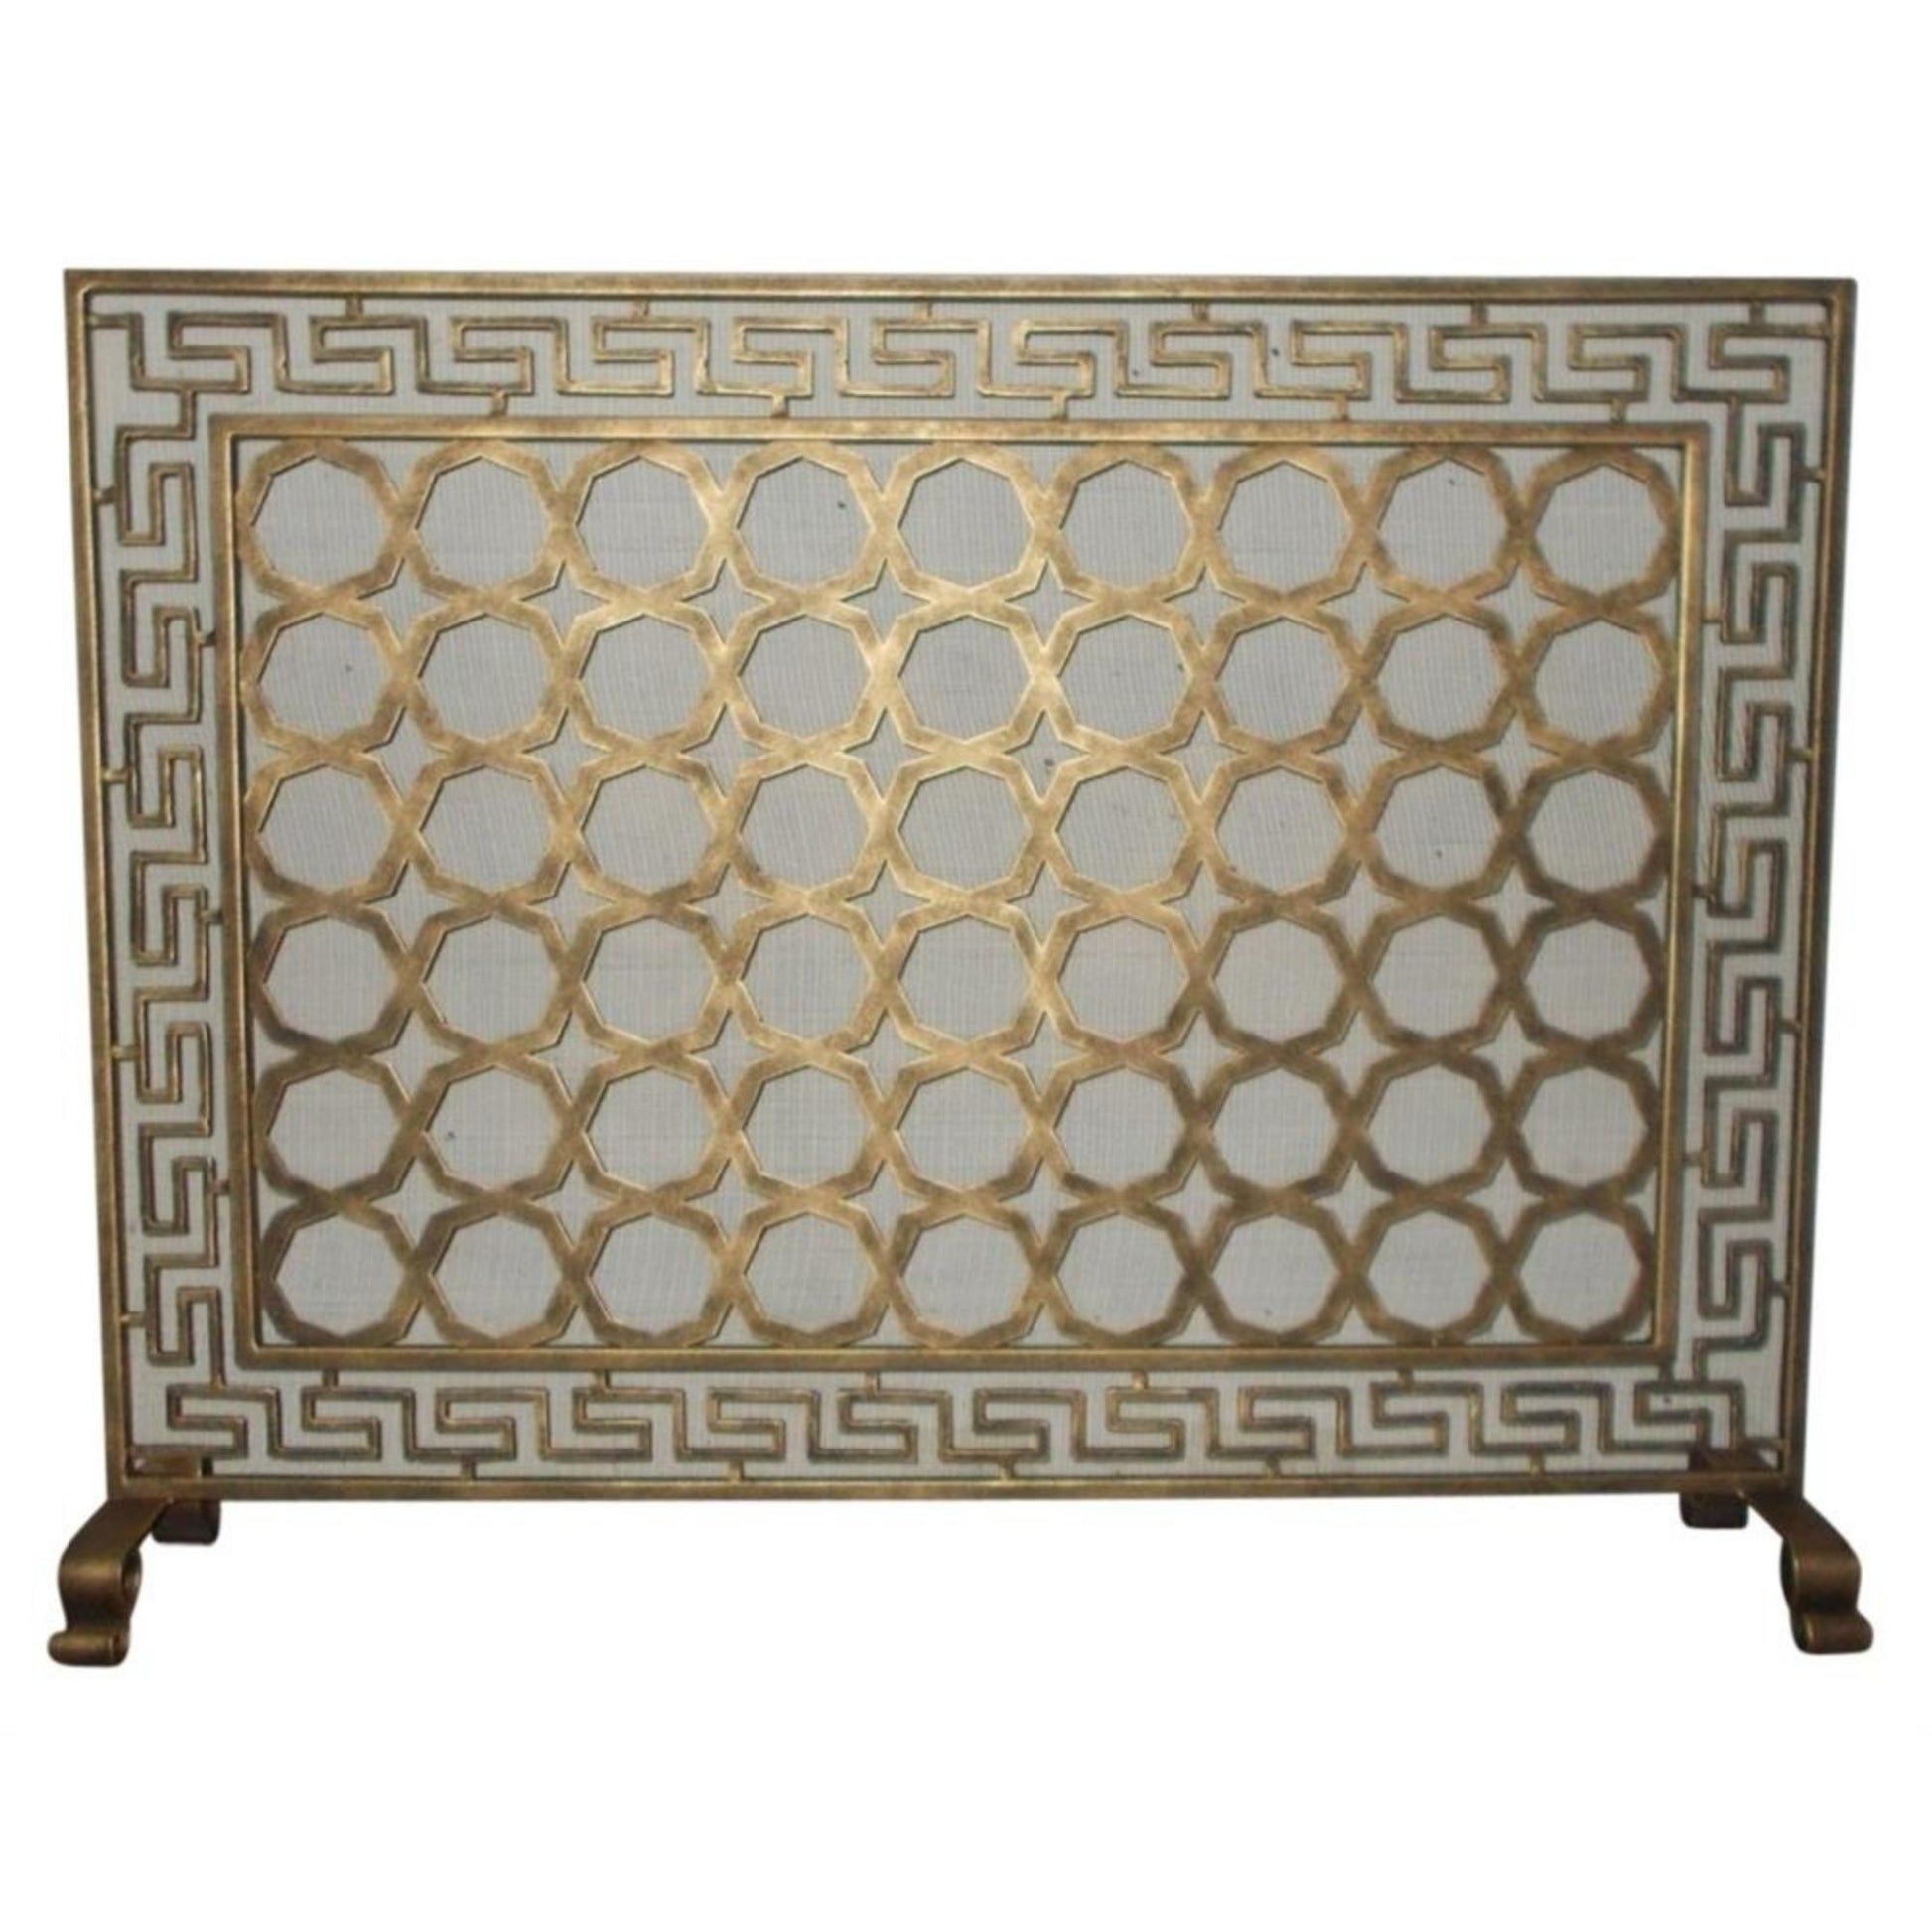 Greek Key Designer Fireplace Screen in a Light Burnished Gold Finish - Single Panel Screen | InsideOutCatalog.com